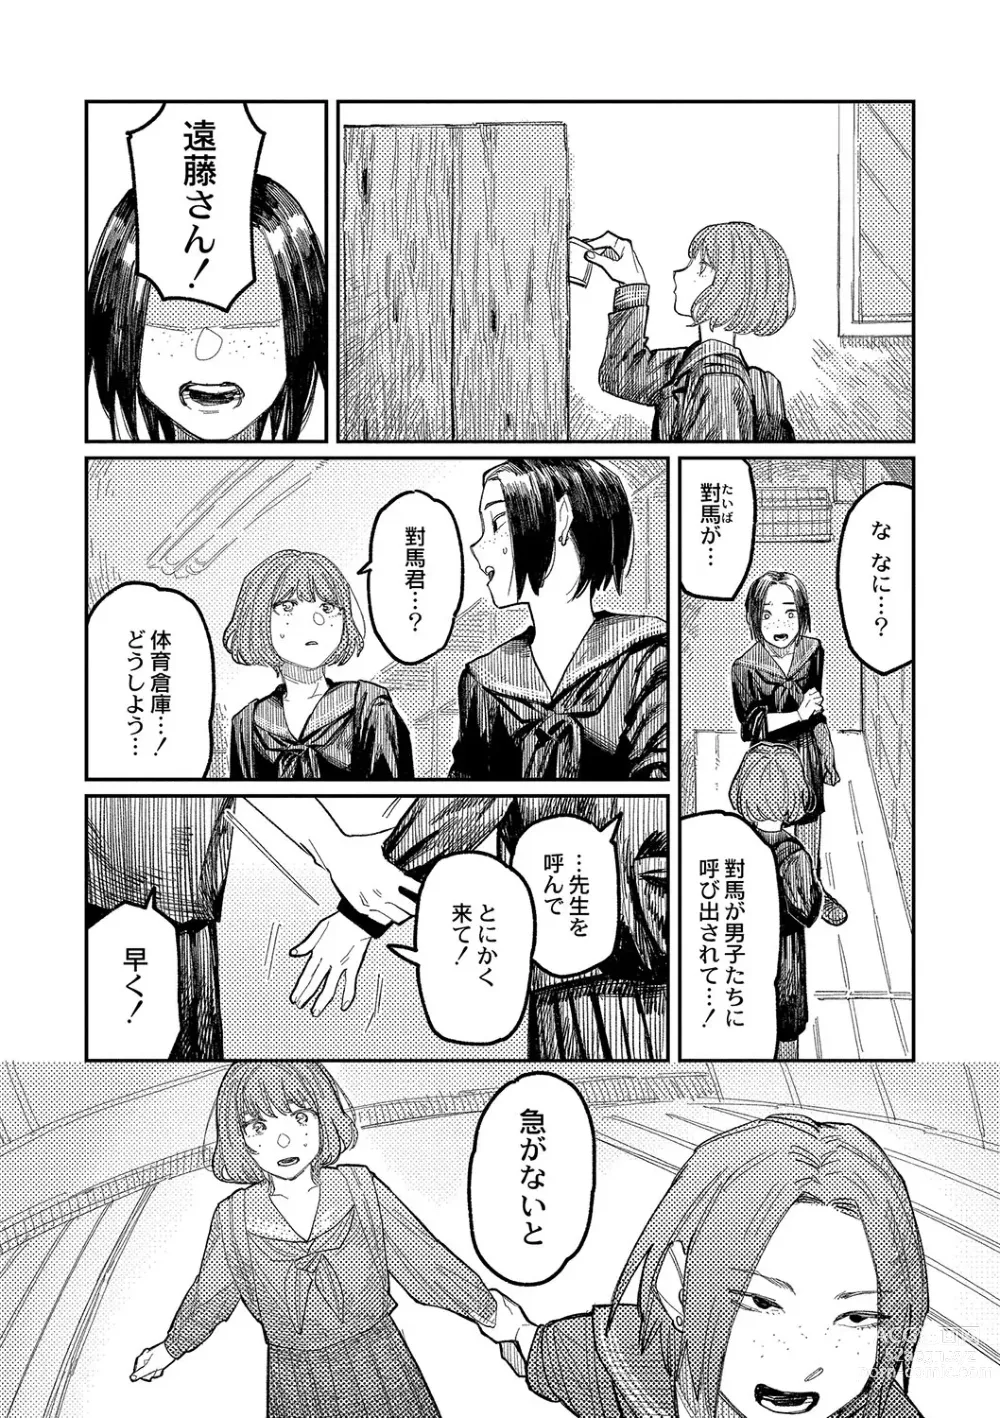 Page 15 of manga Oyasumi, Teen - Good Night, Goodbye